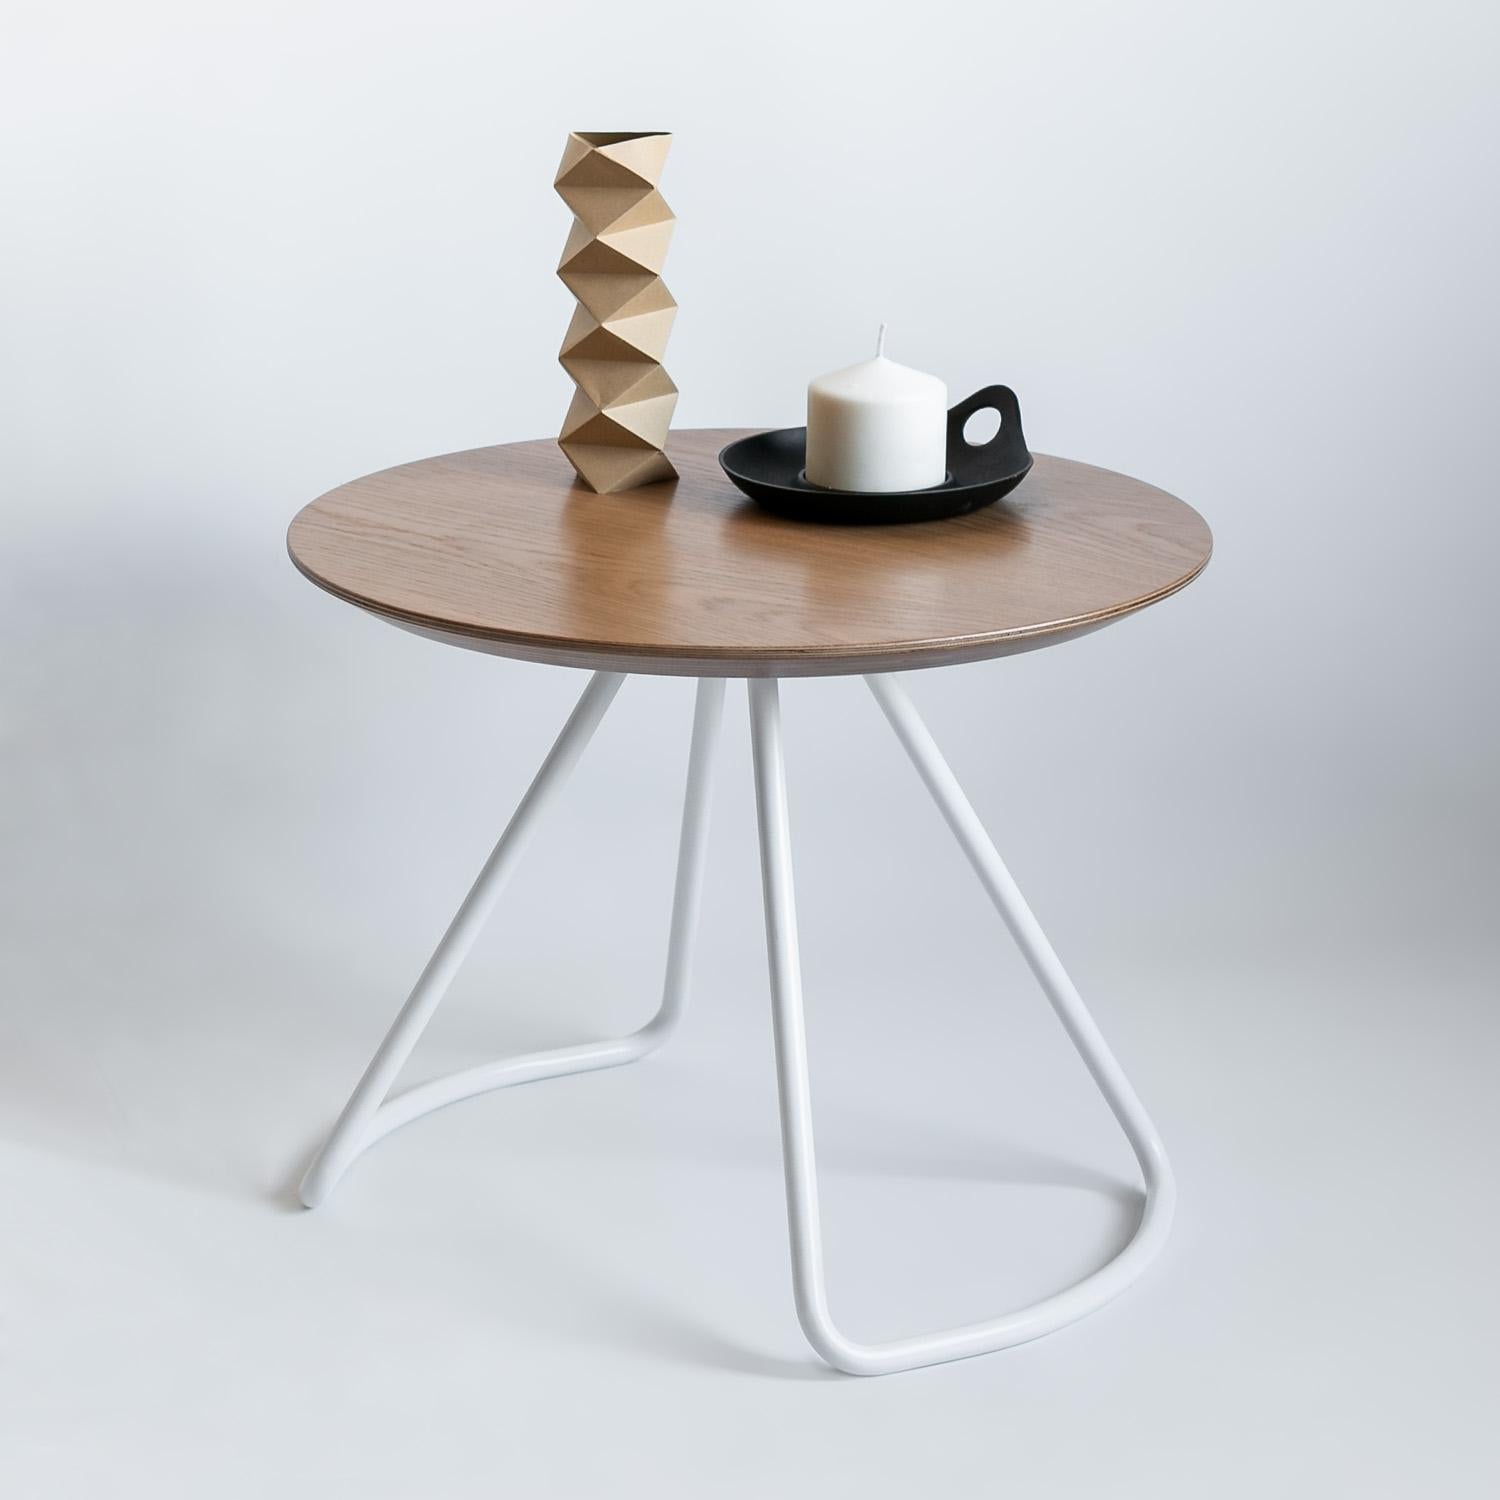 Turkish Sama Coffee Table, Contemporary Modern Minimalist Natural Oak & White Metal For Sale